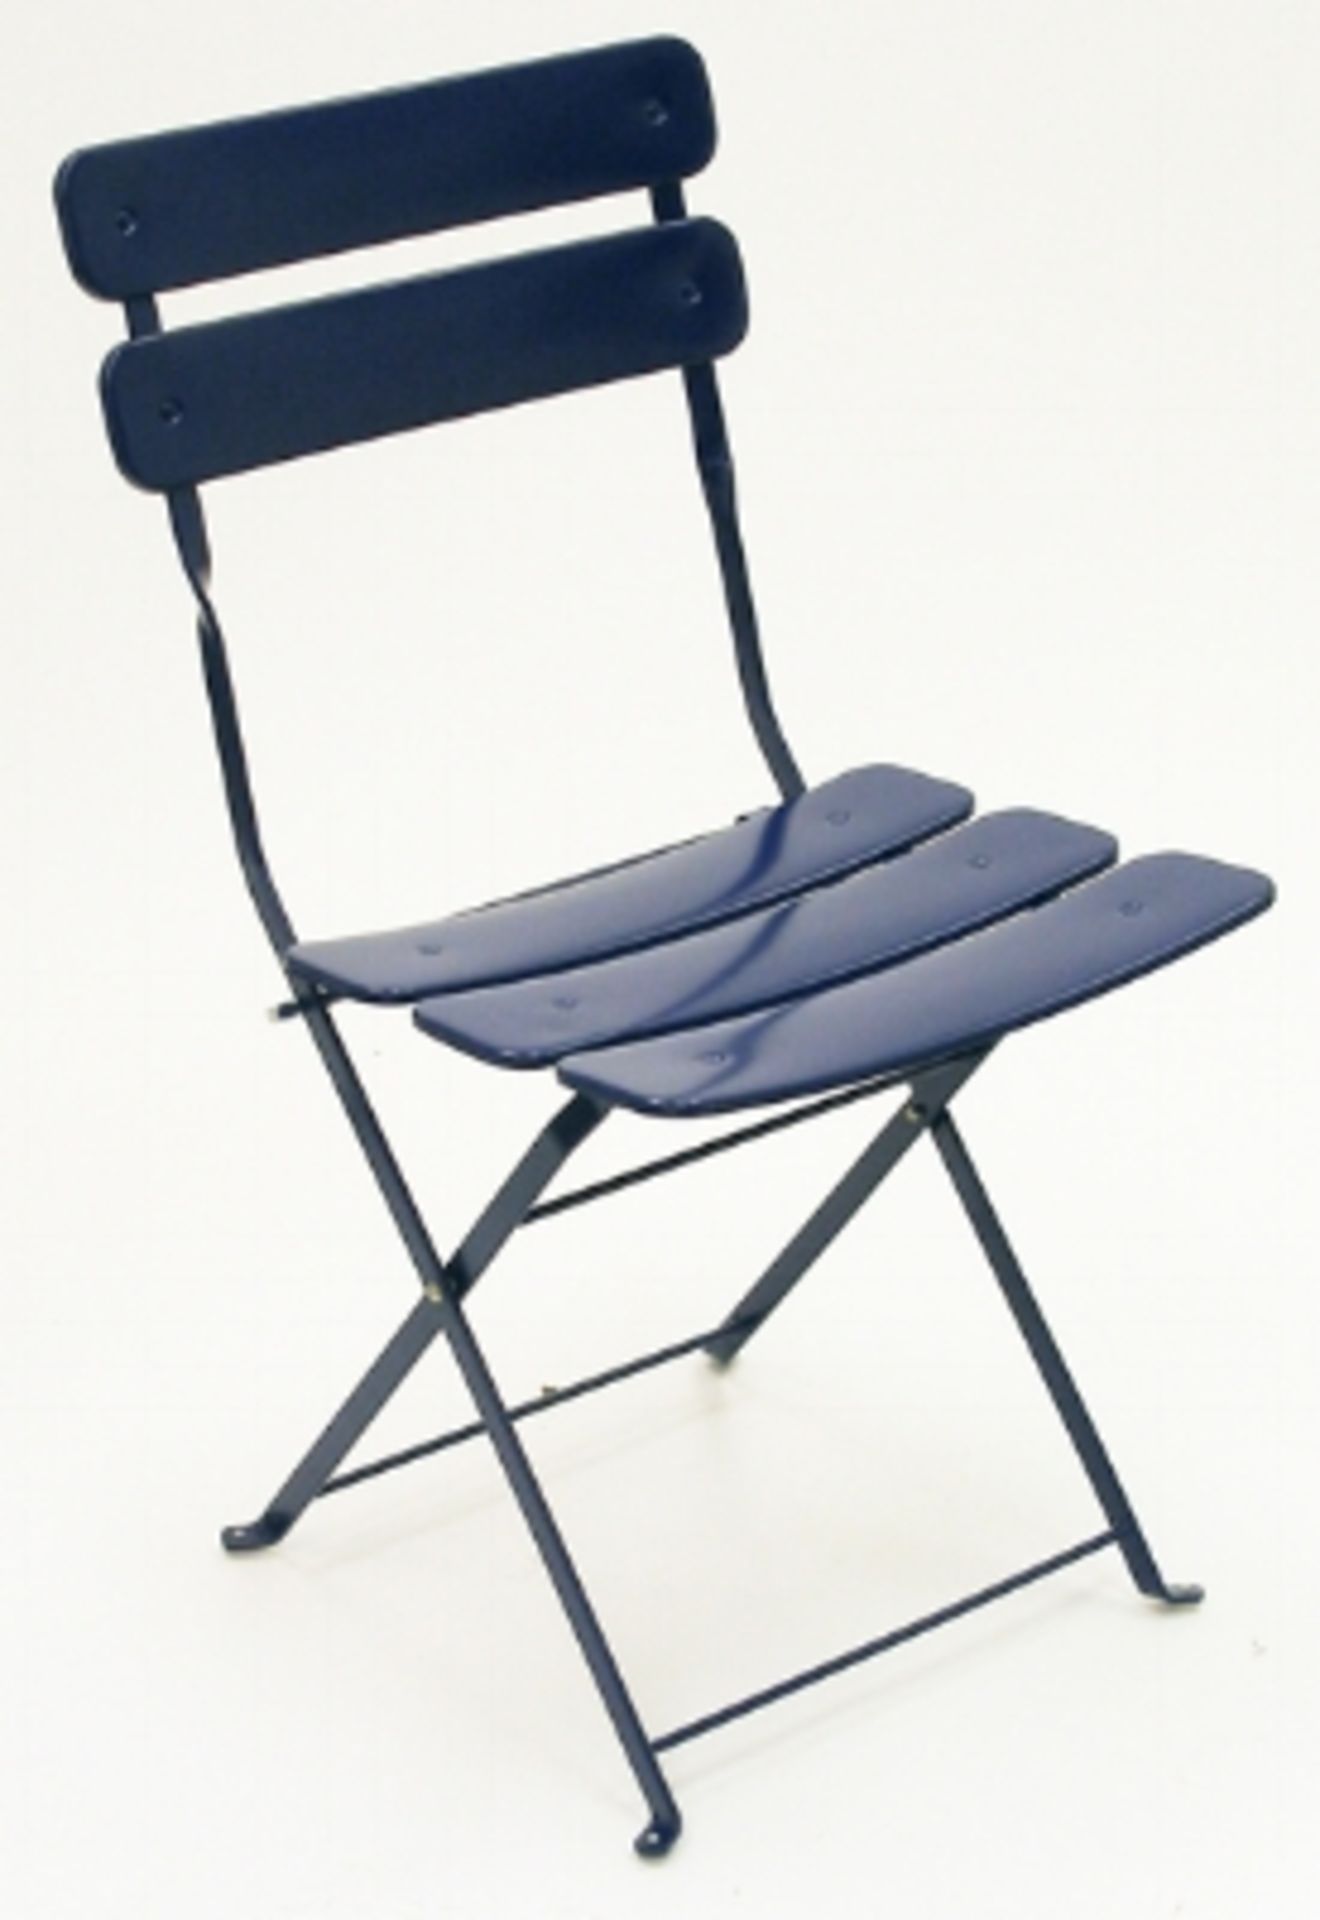 Jardin Folding Side Chair - Blue. ElectroZinc treated steel, powder coated. Dimensions: 18.9"w x